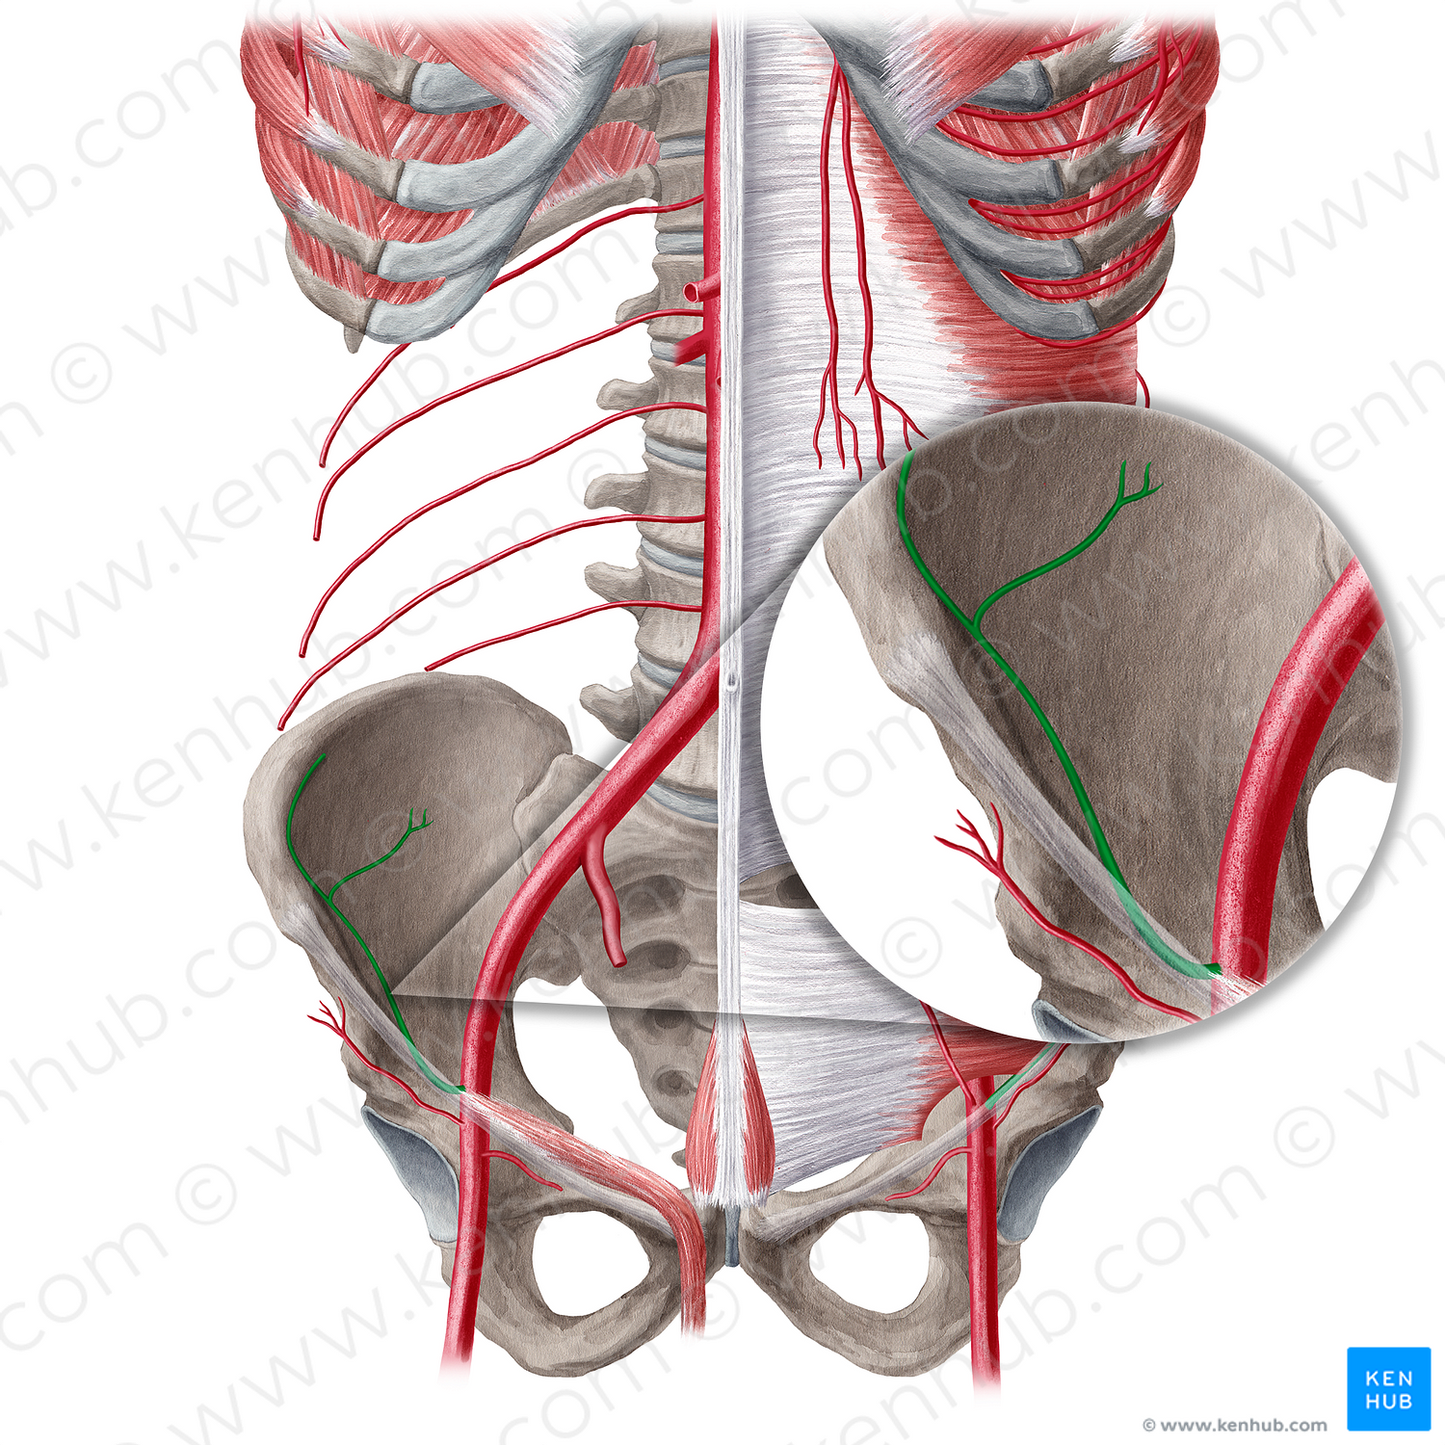 Deep circumflex iliac artery (#21558)